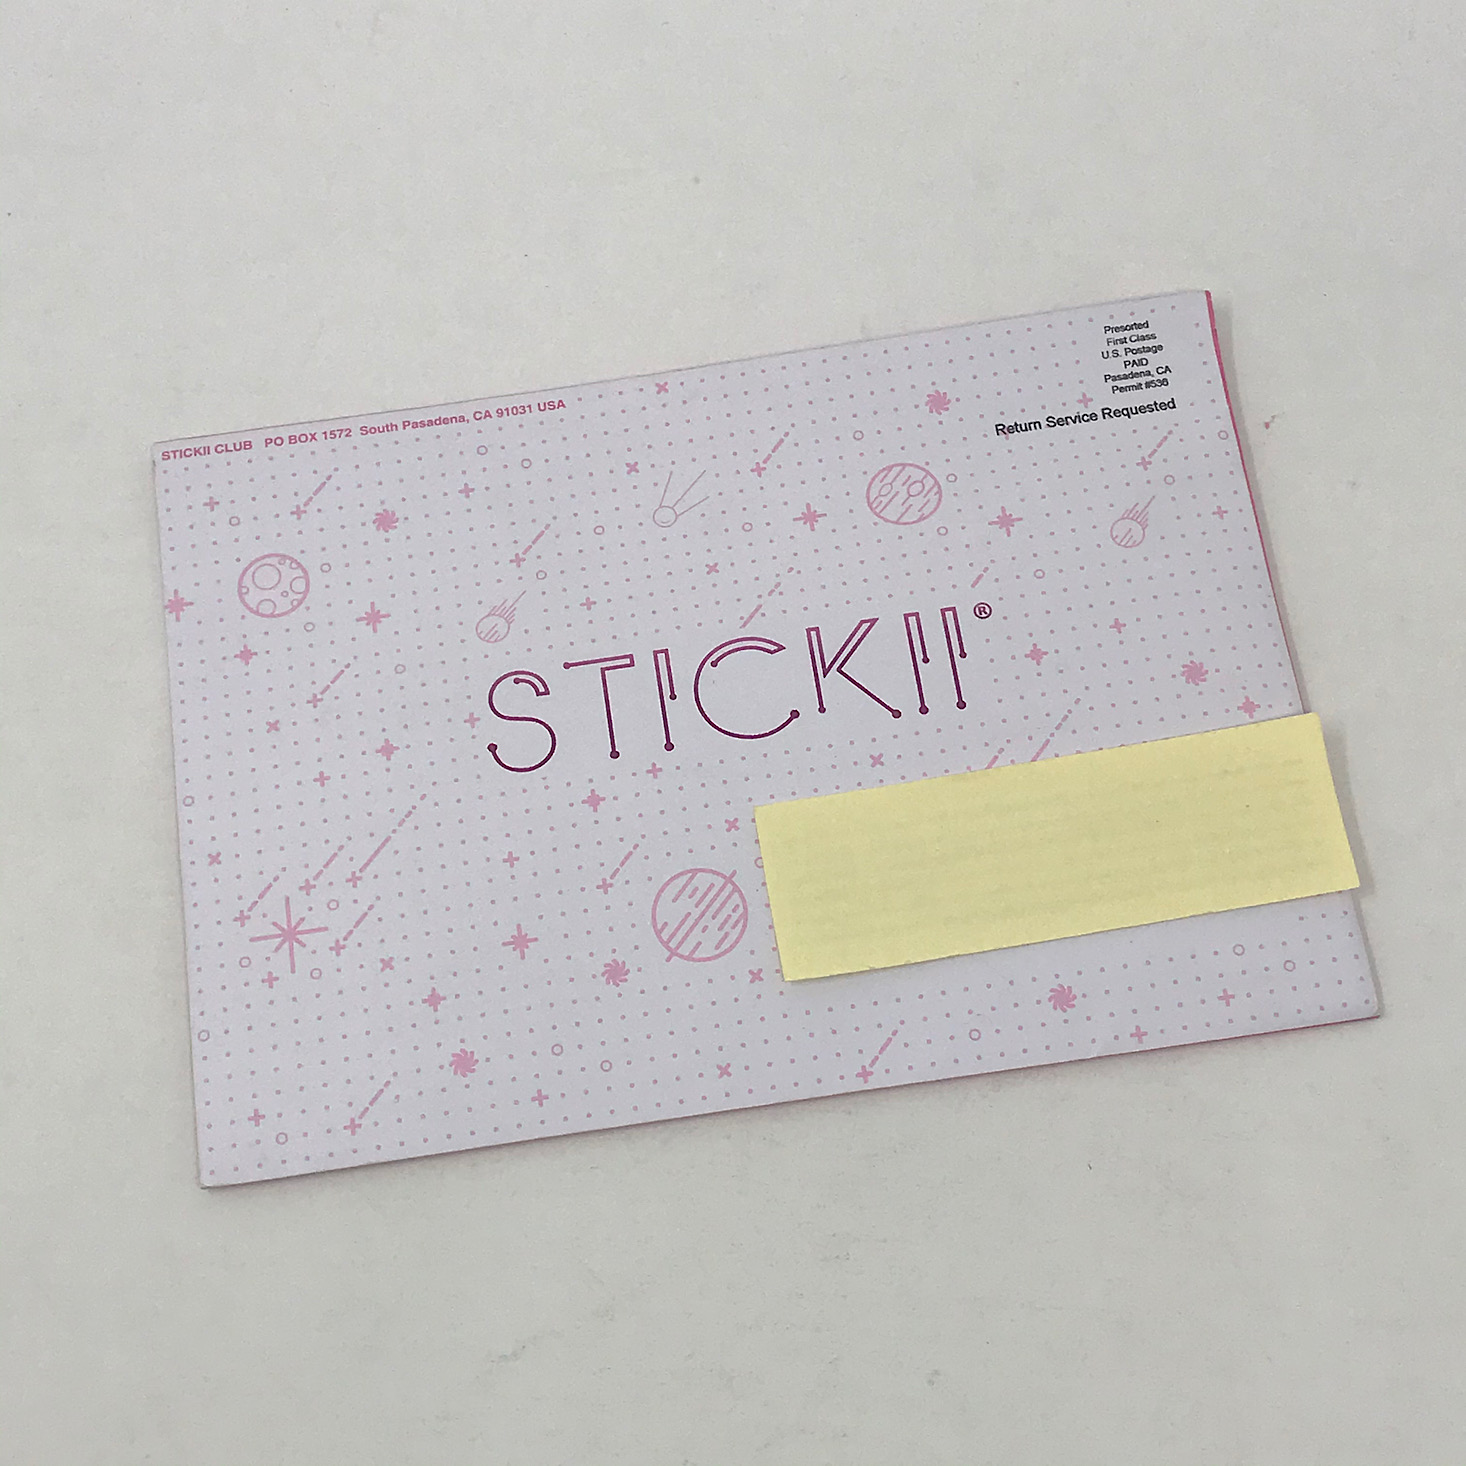 Stickii Sticker Cute Pack Review – December 2019